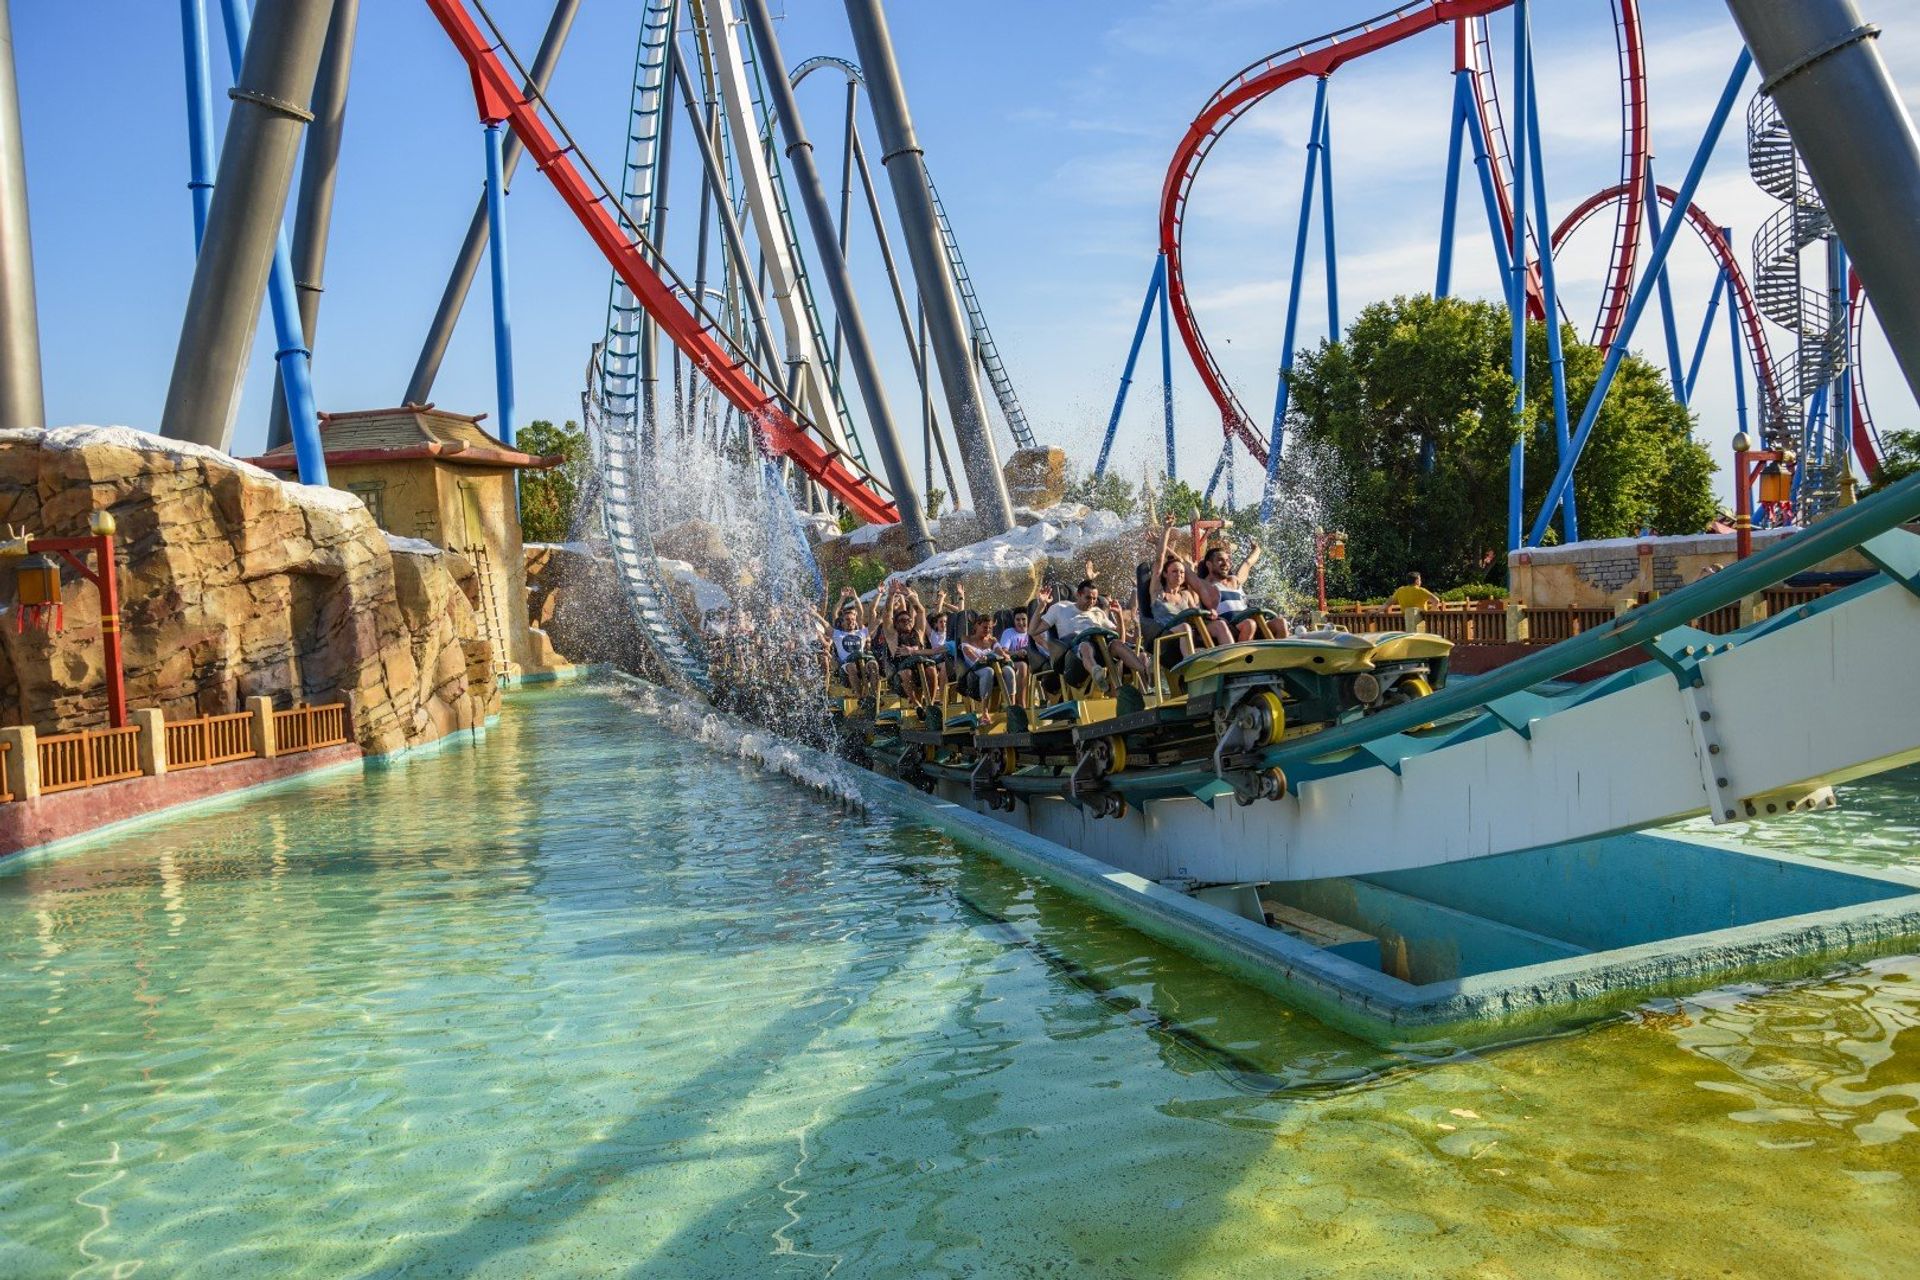 Make a splash at PortAventura World, the largest theme park in Spain